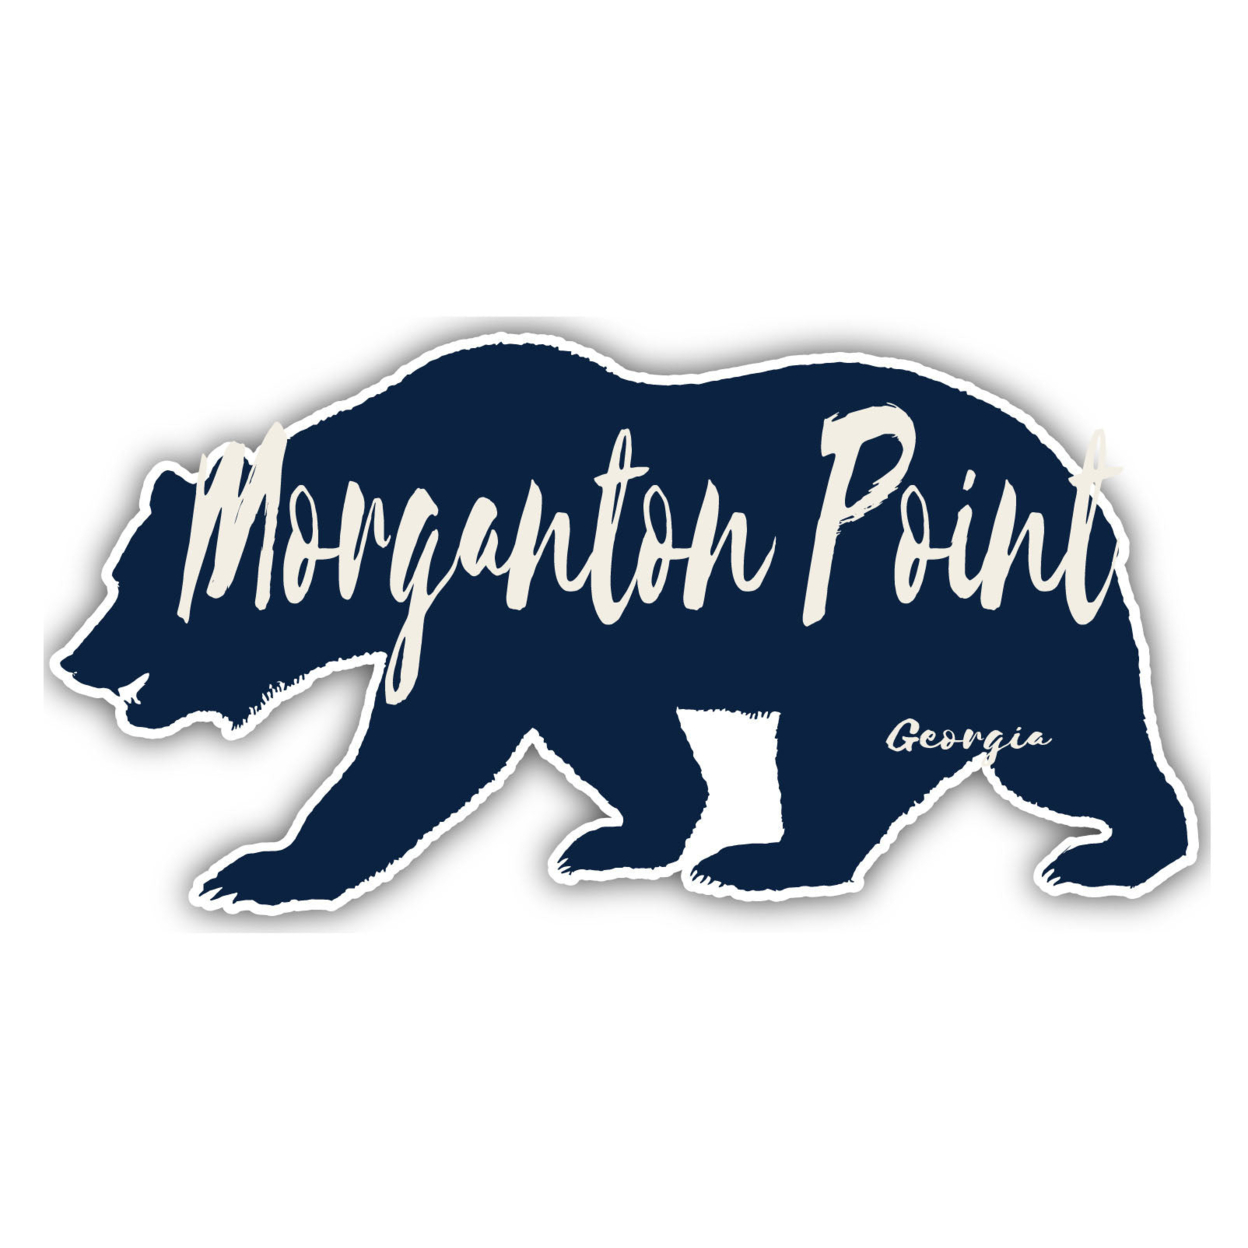 Morganton Point Georgia Souvenir Decorative Stickers (Choose Theme And Size) - Single Unit, 4-Inch, Bear